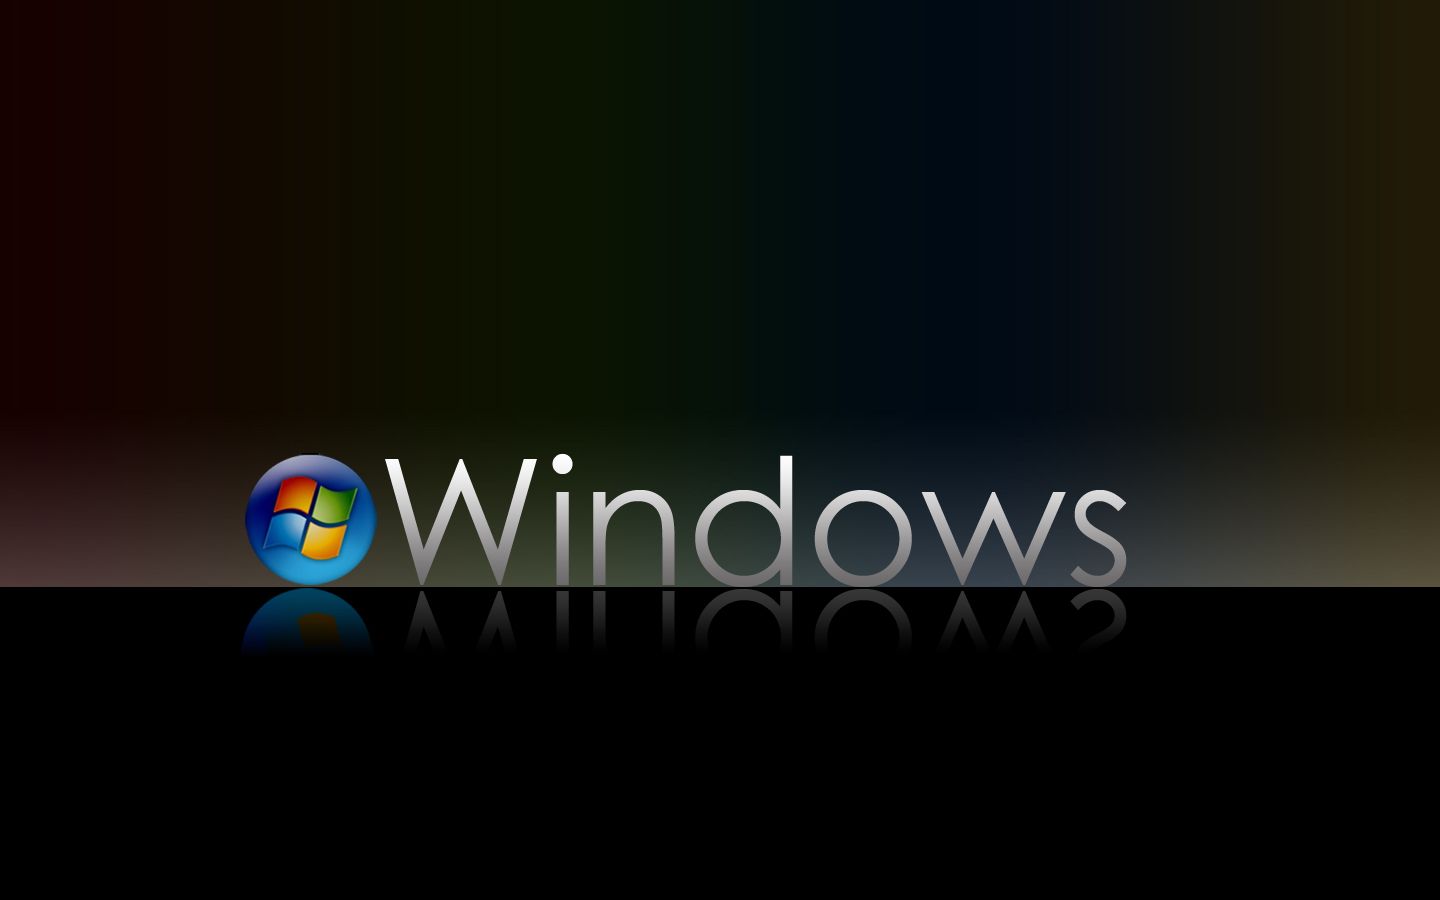 Windows Vista Wallpaper Hd Wallpaper - 56951